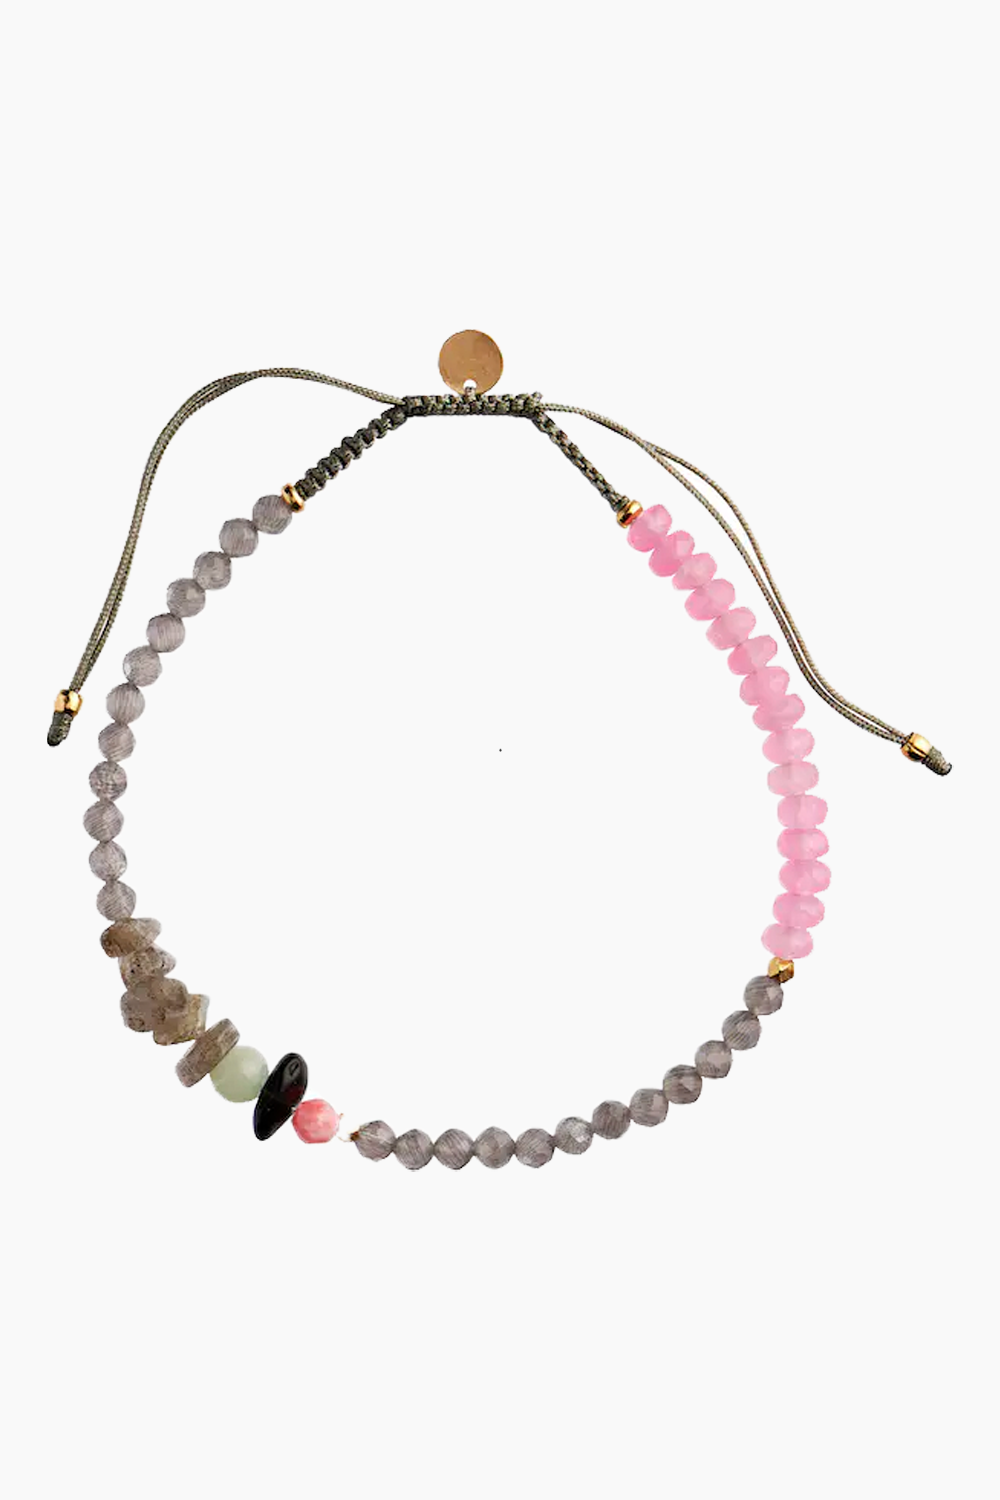 7: Harmony Bracelet With Calm Grey & Pink Gemstones and Khakigrey Ribbon - Stine A - Multi One Size